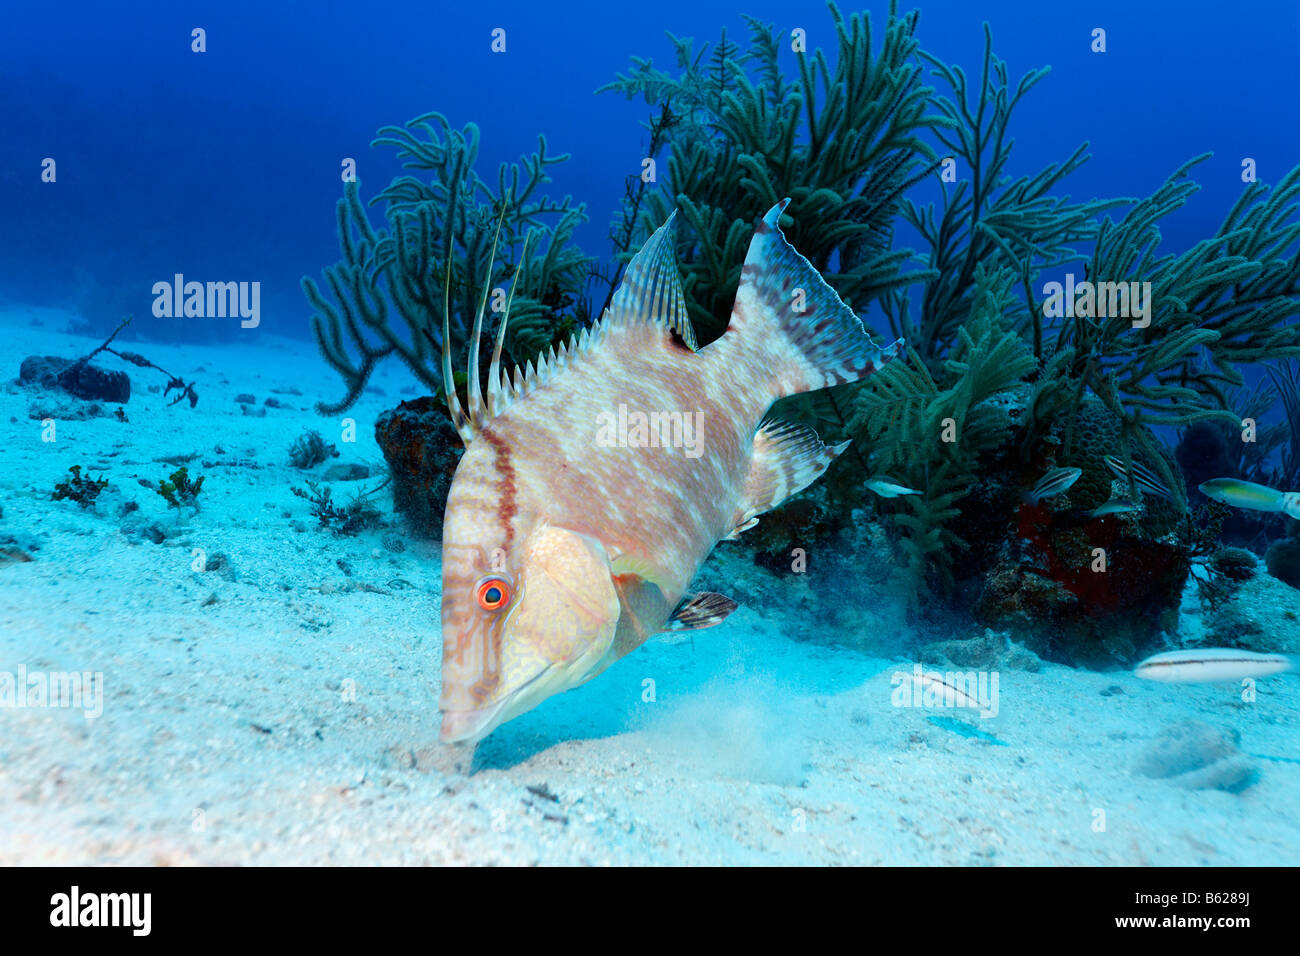 Lippfische (Lachnolaimus Maximus) suchen in den sandigen Meeresboden nach Nahrung, Hopkins, Dangria, Belize, Mittelamerika, Karibik Stockfoto